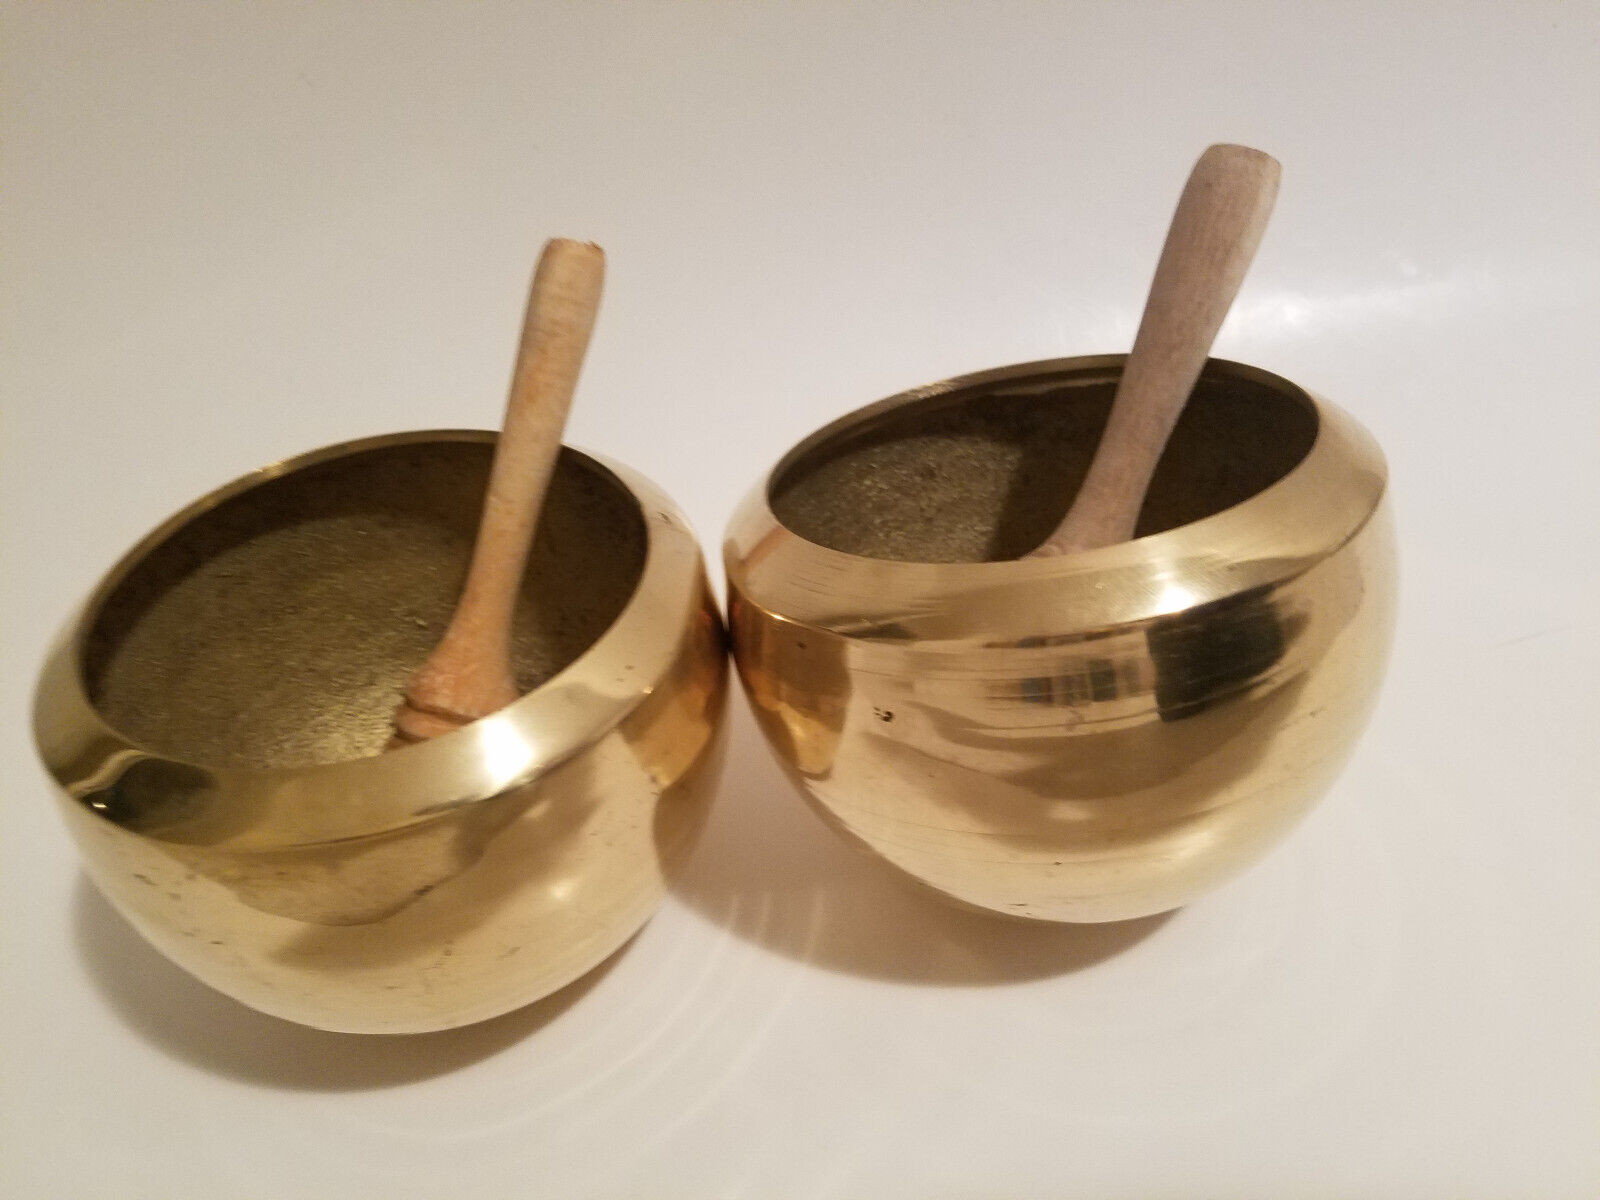 4 Singing bowls, 7 Inch brass & mallets